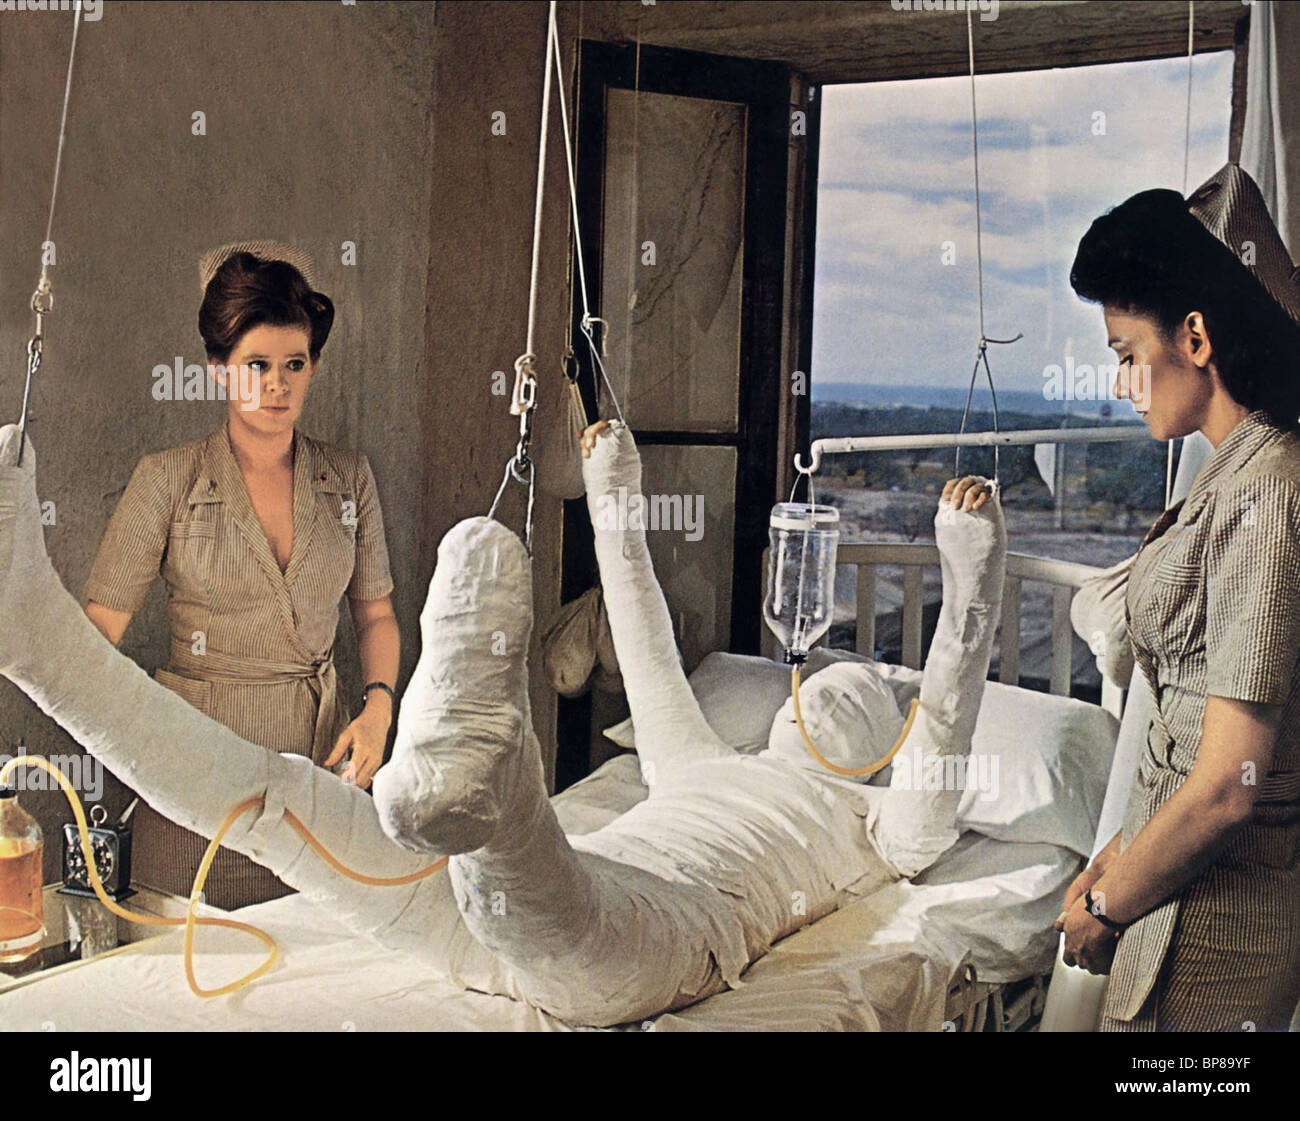 bandaged-man-in-hospital-catch-22-1970-BP89YF.jpg